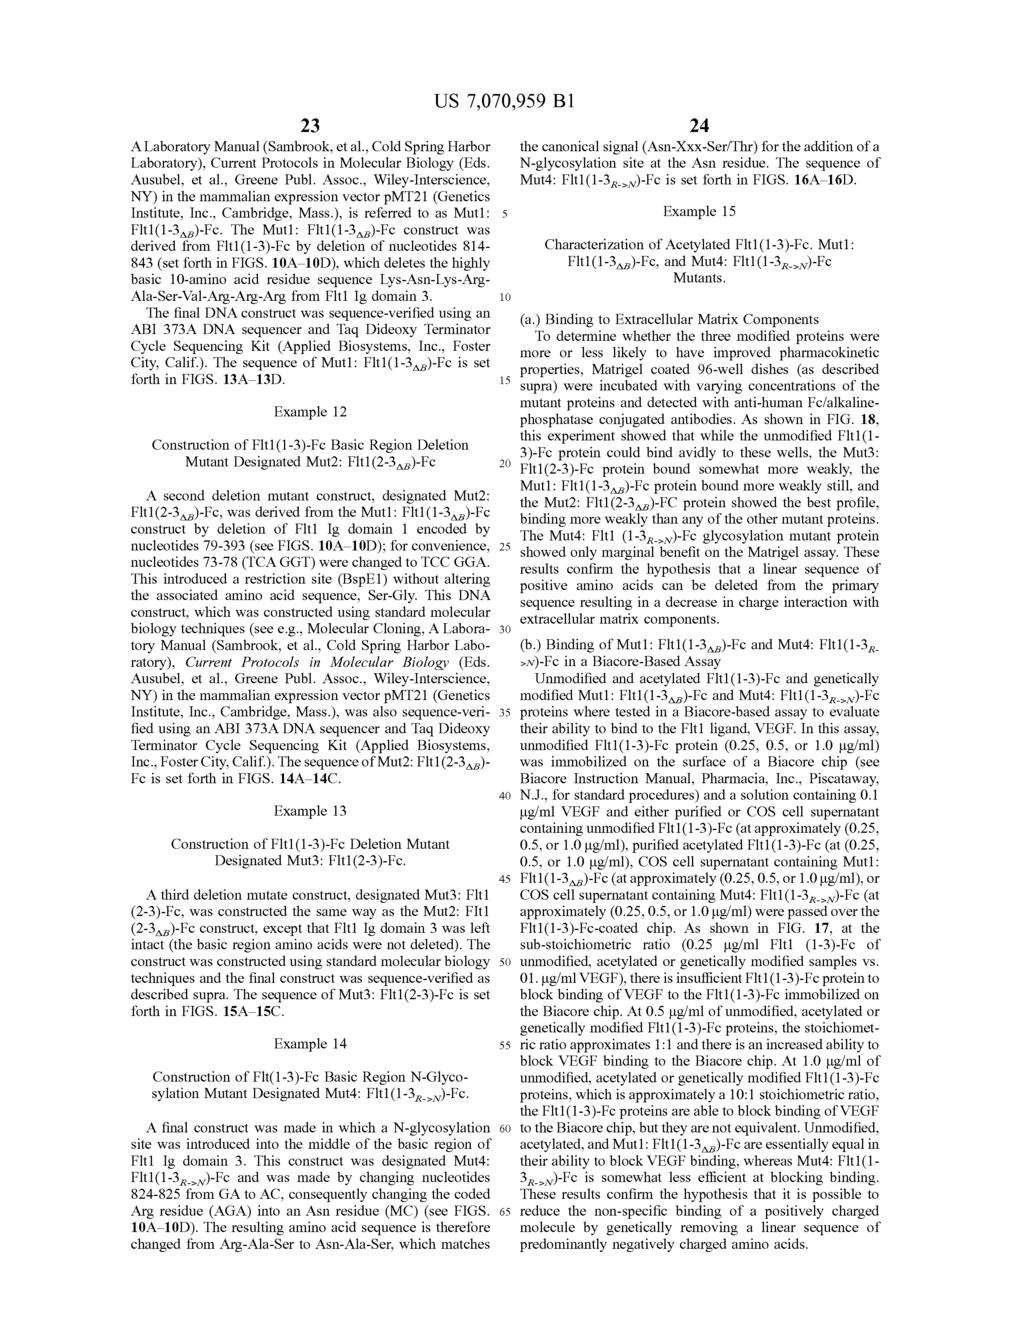 23 A Laboratory Manual (Sambrook, et al., Cold Spring Harbor Laboratory), Current Protocols in Molecular Biology (Eds. Ausubel, et al., Greene Publ. Assoc.